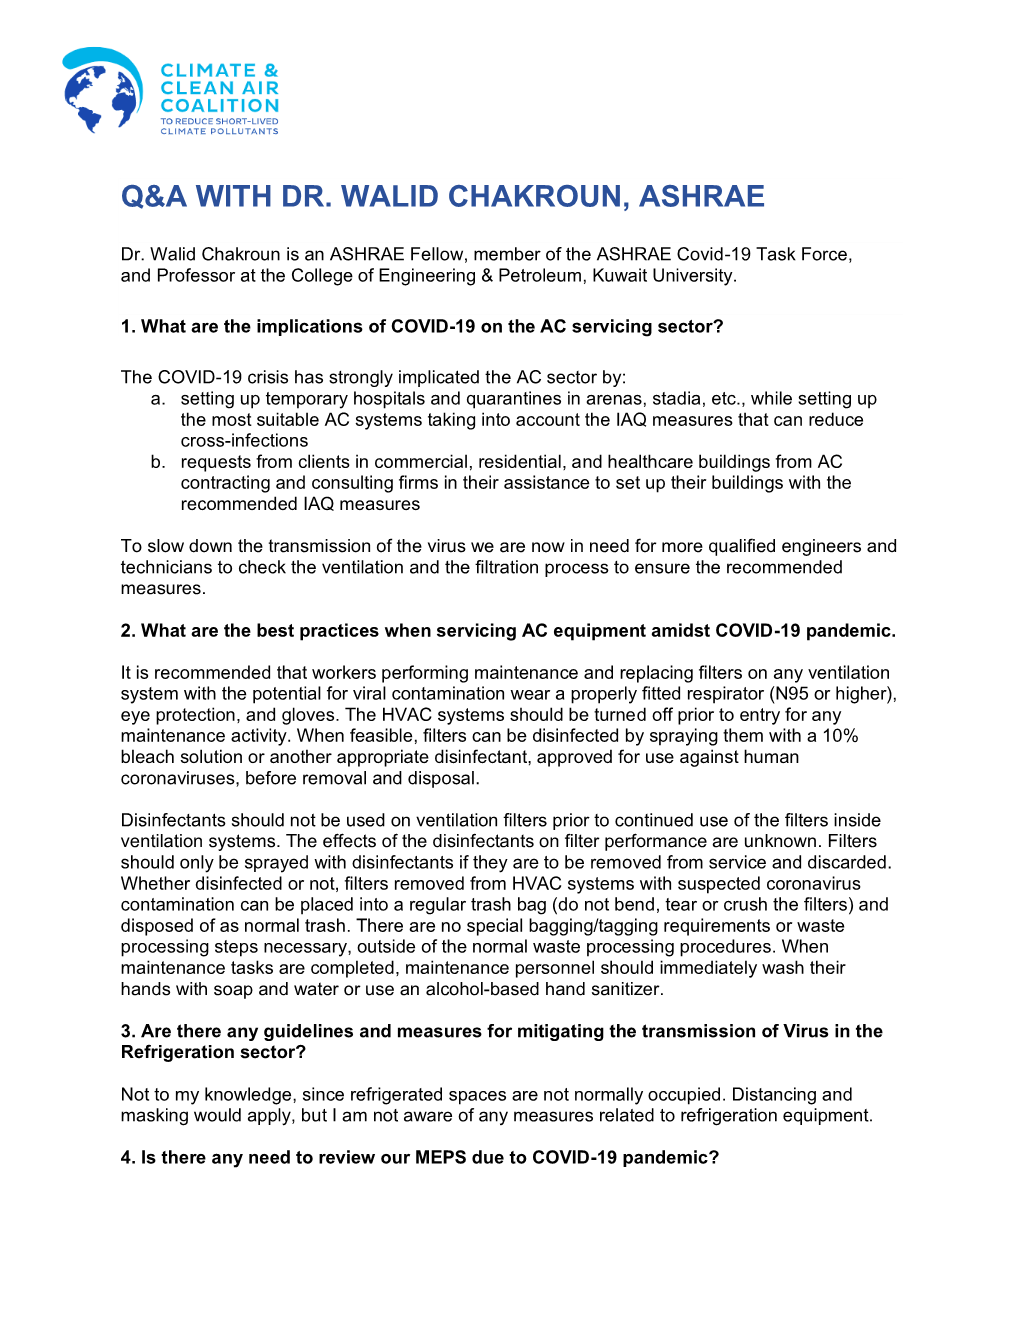 Q&A with Dr. Walid Chakroun, Ashrae